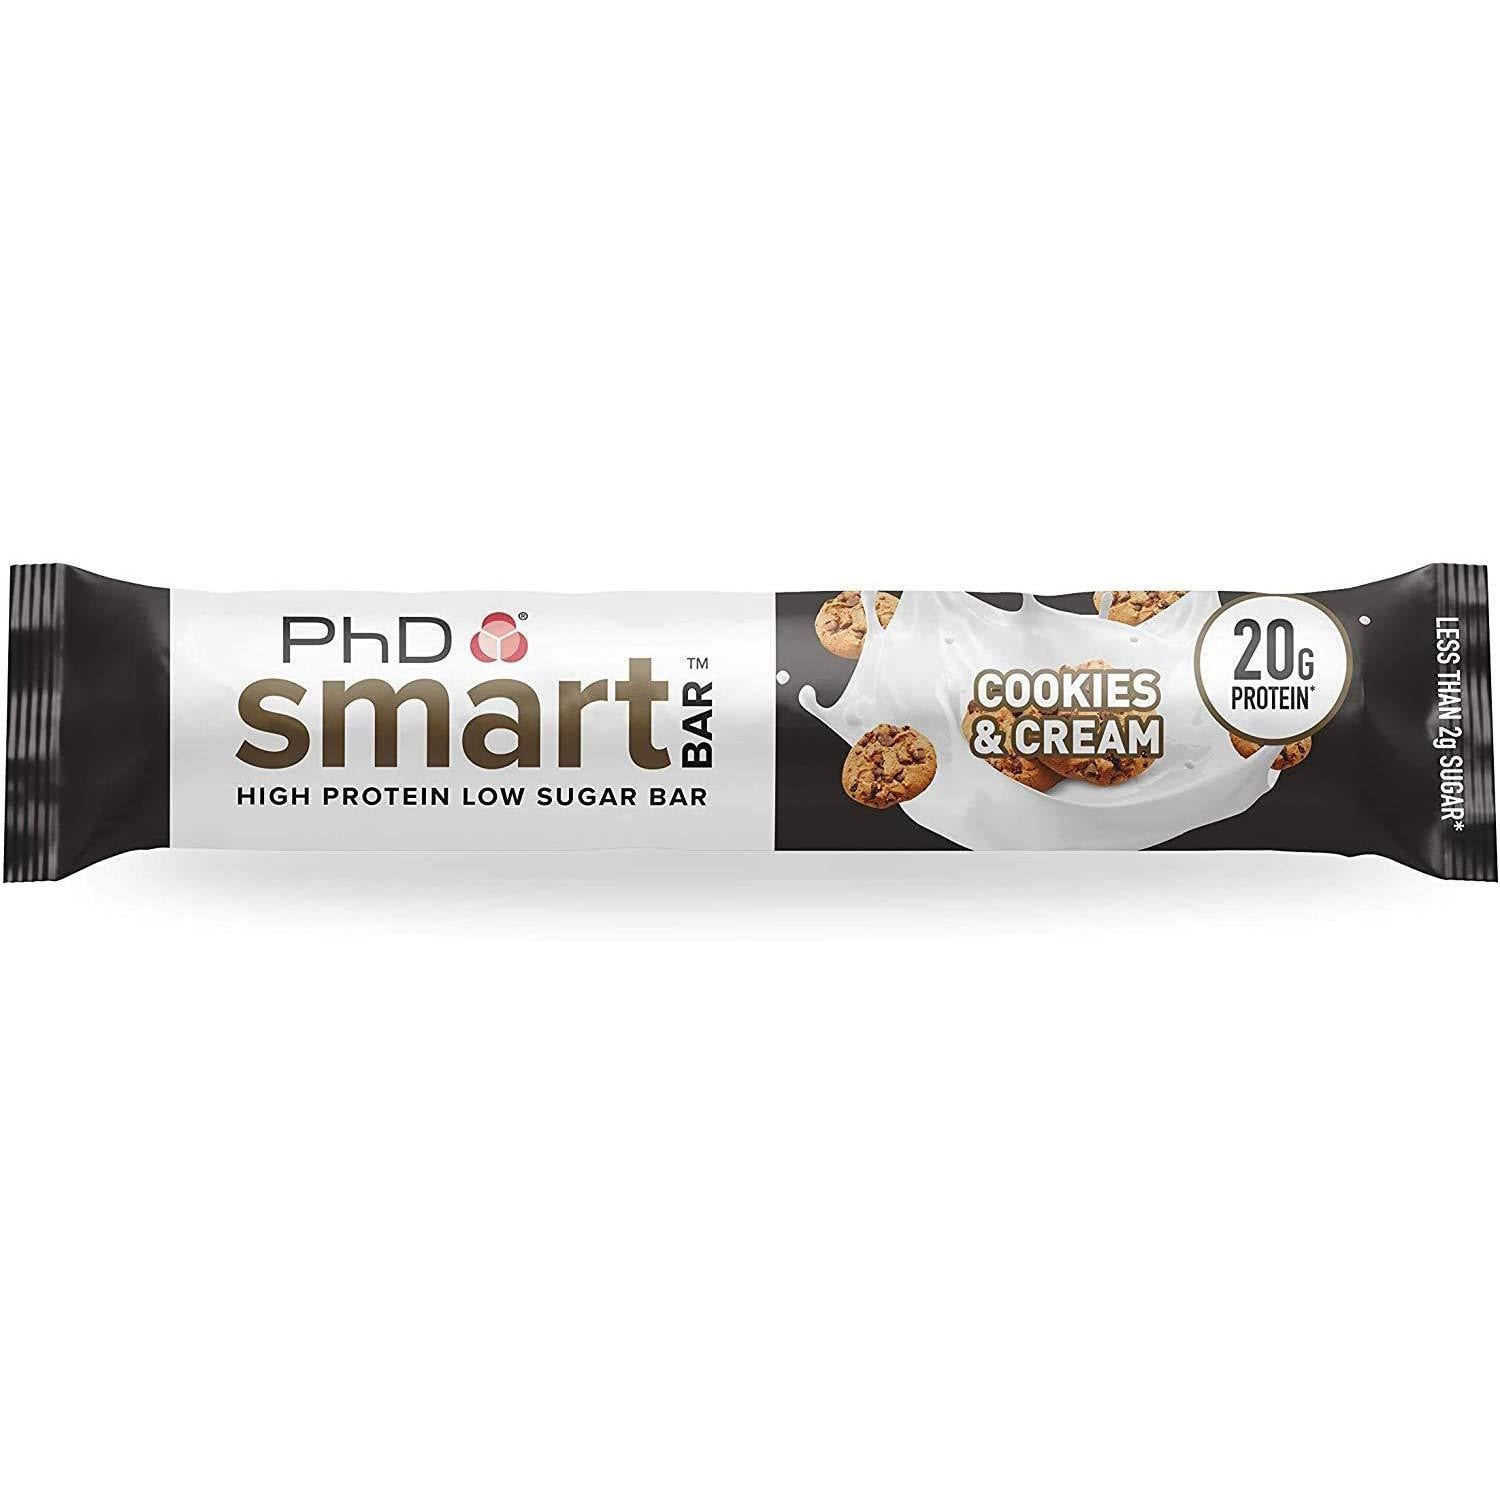 PhD Smart Bar - Cookies & Cream, 64g